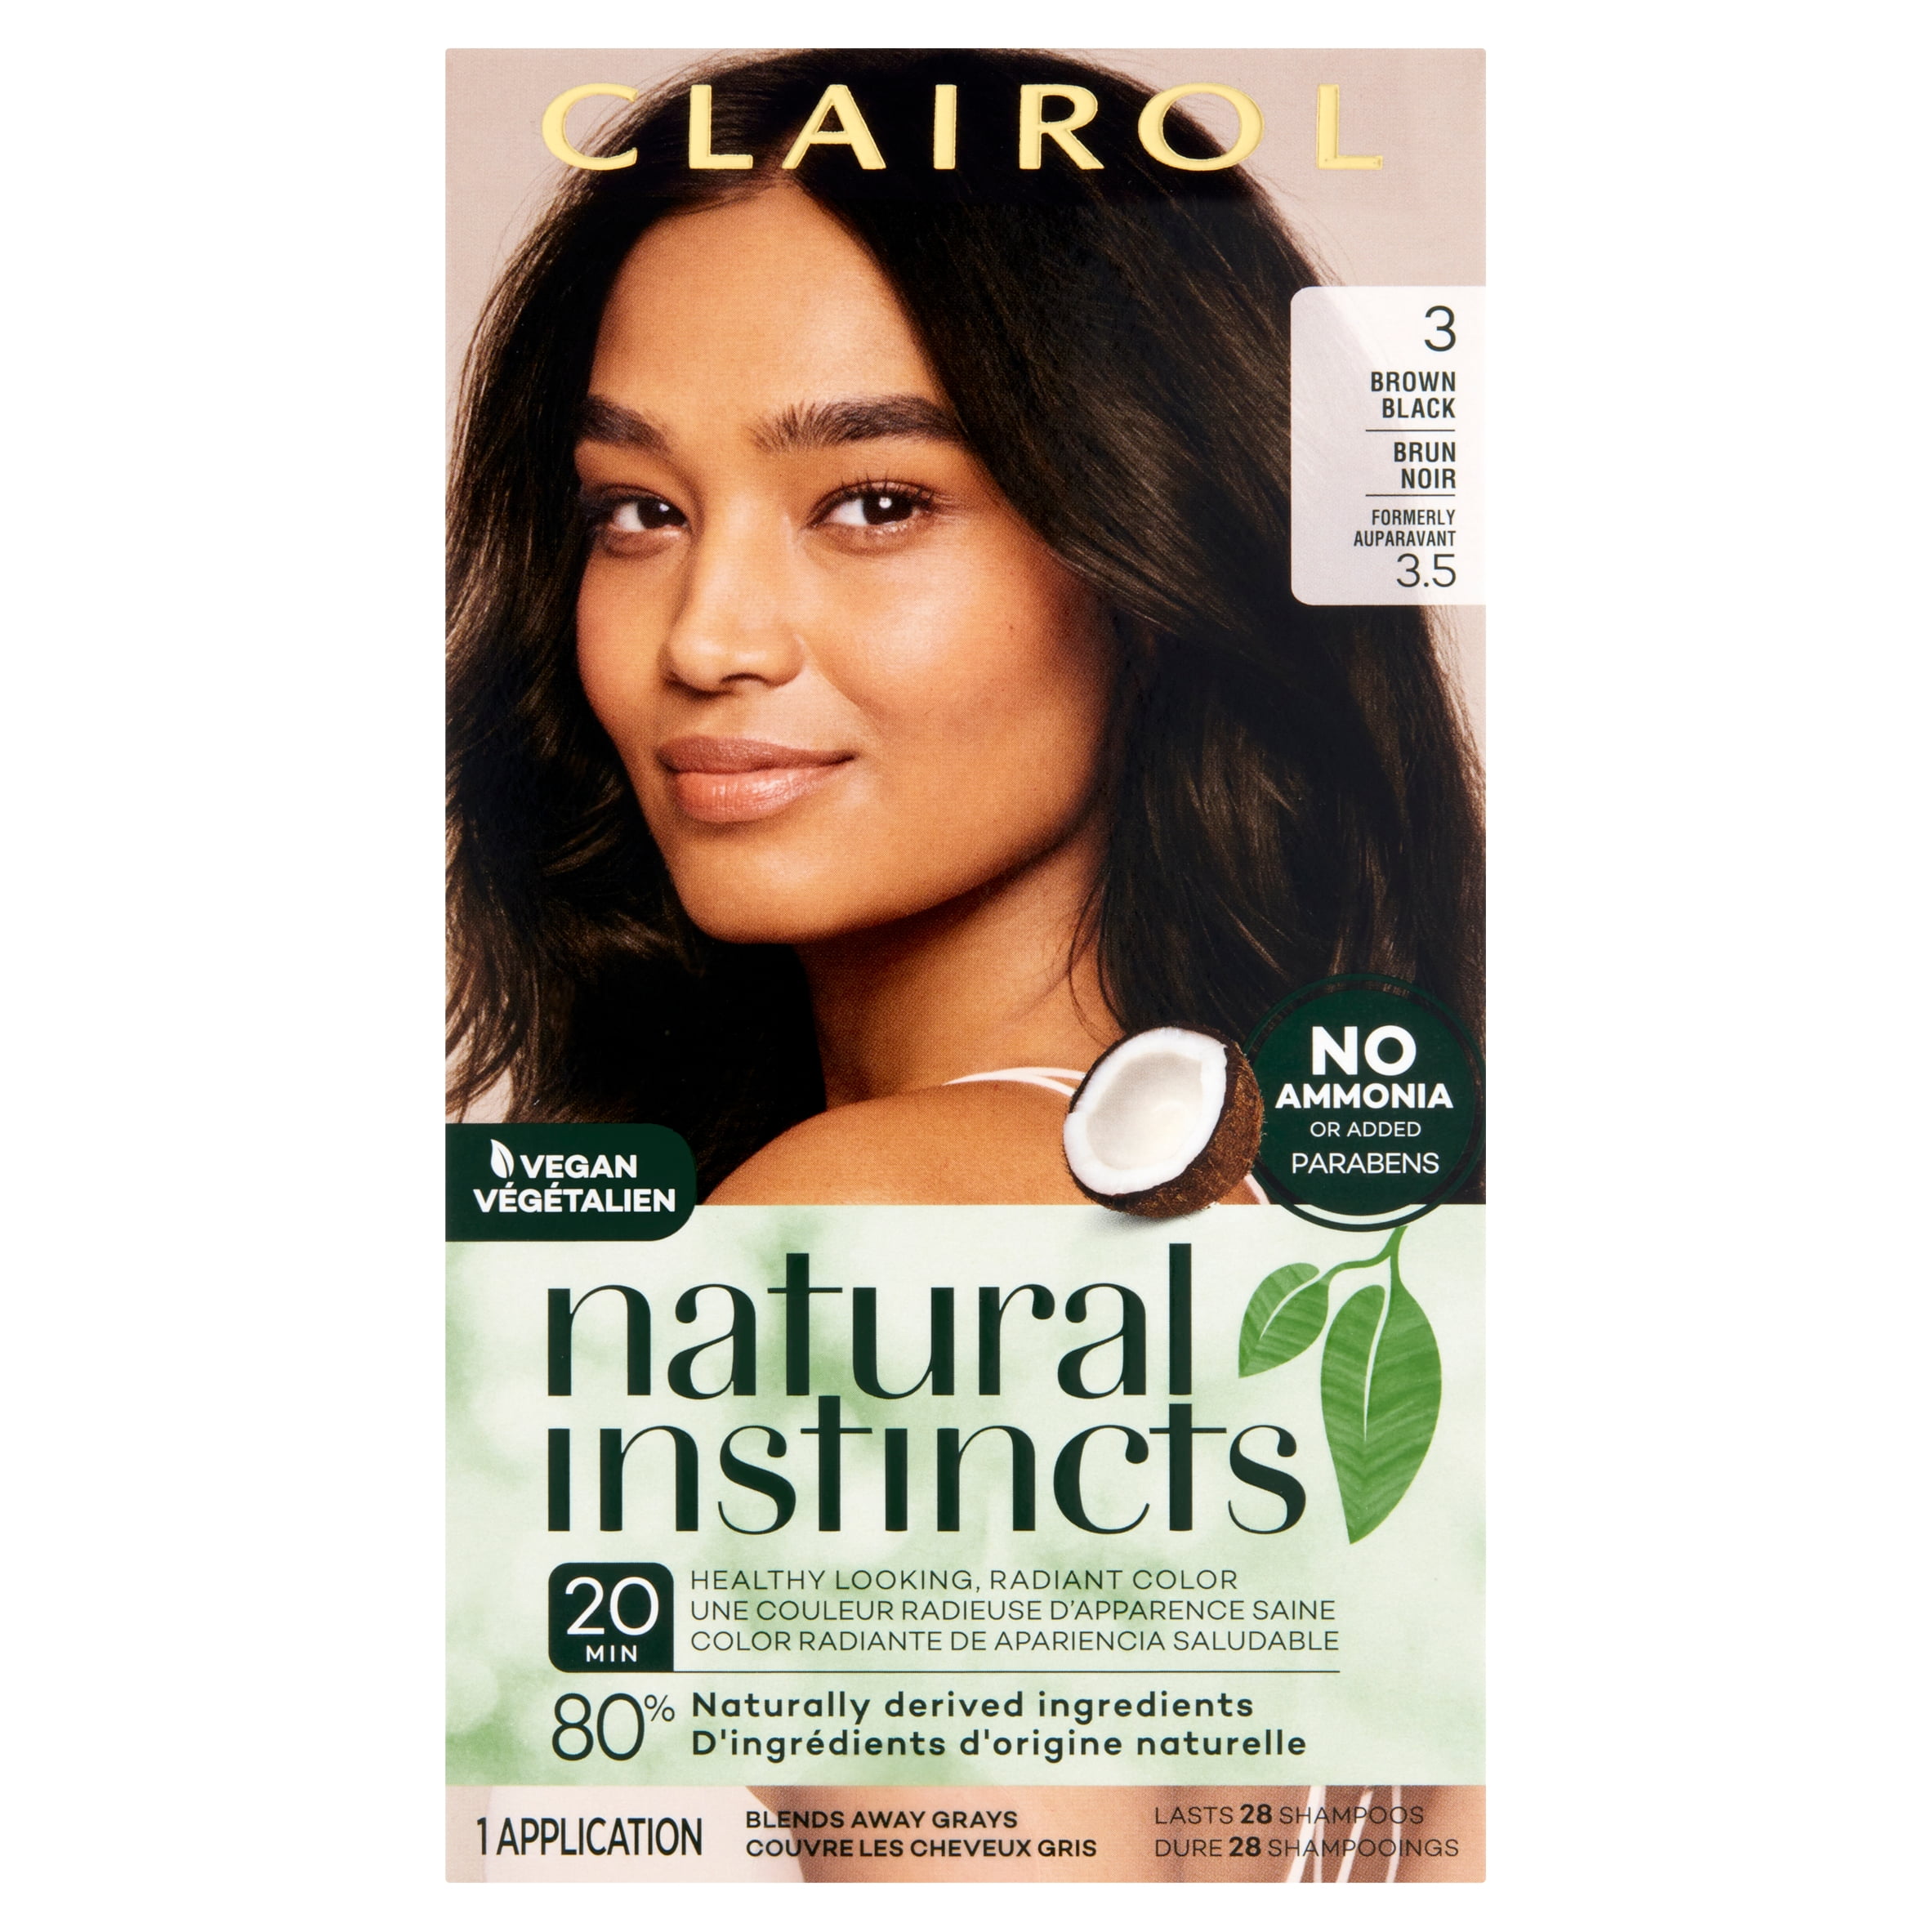 Clairol Natural Instincts Demi-Permanent Hair Color Crème, 3 Brown Black, 1  Application 